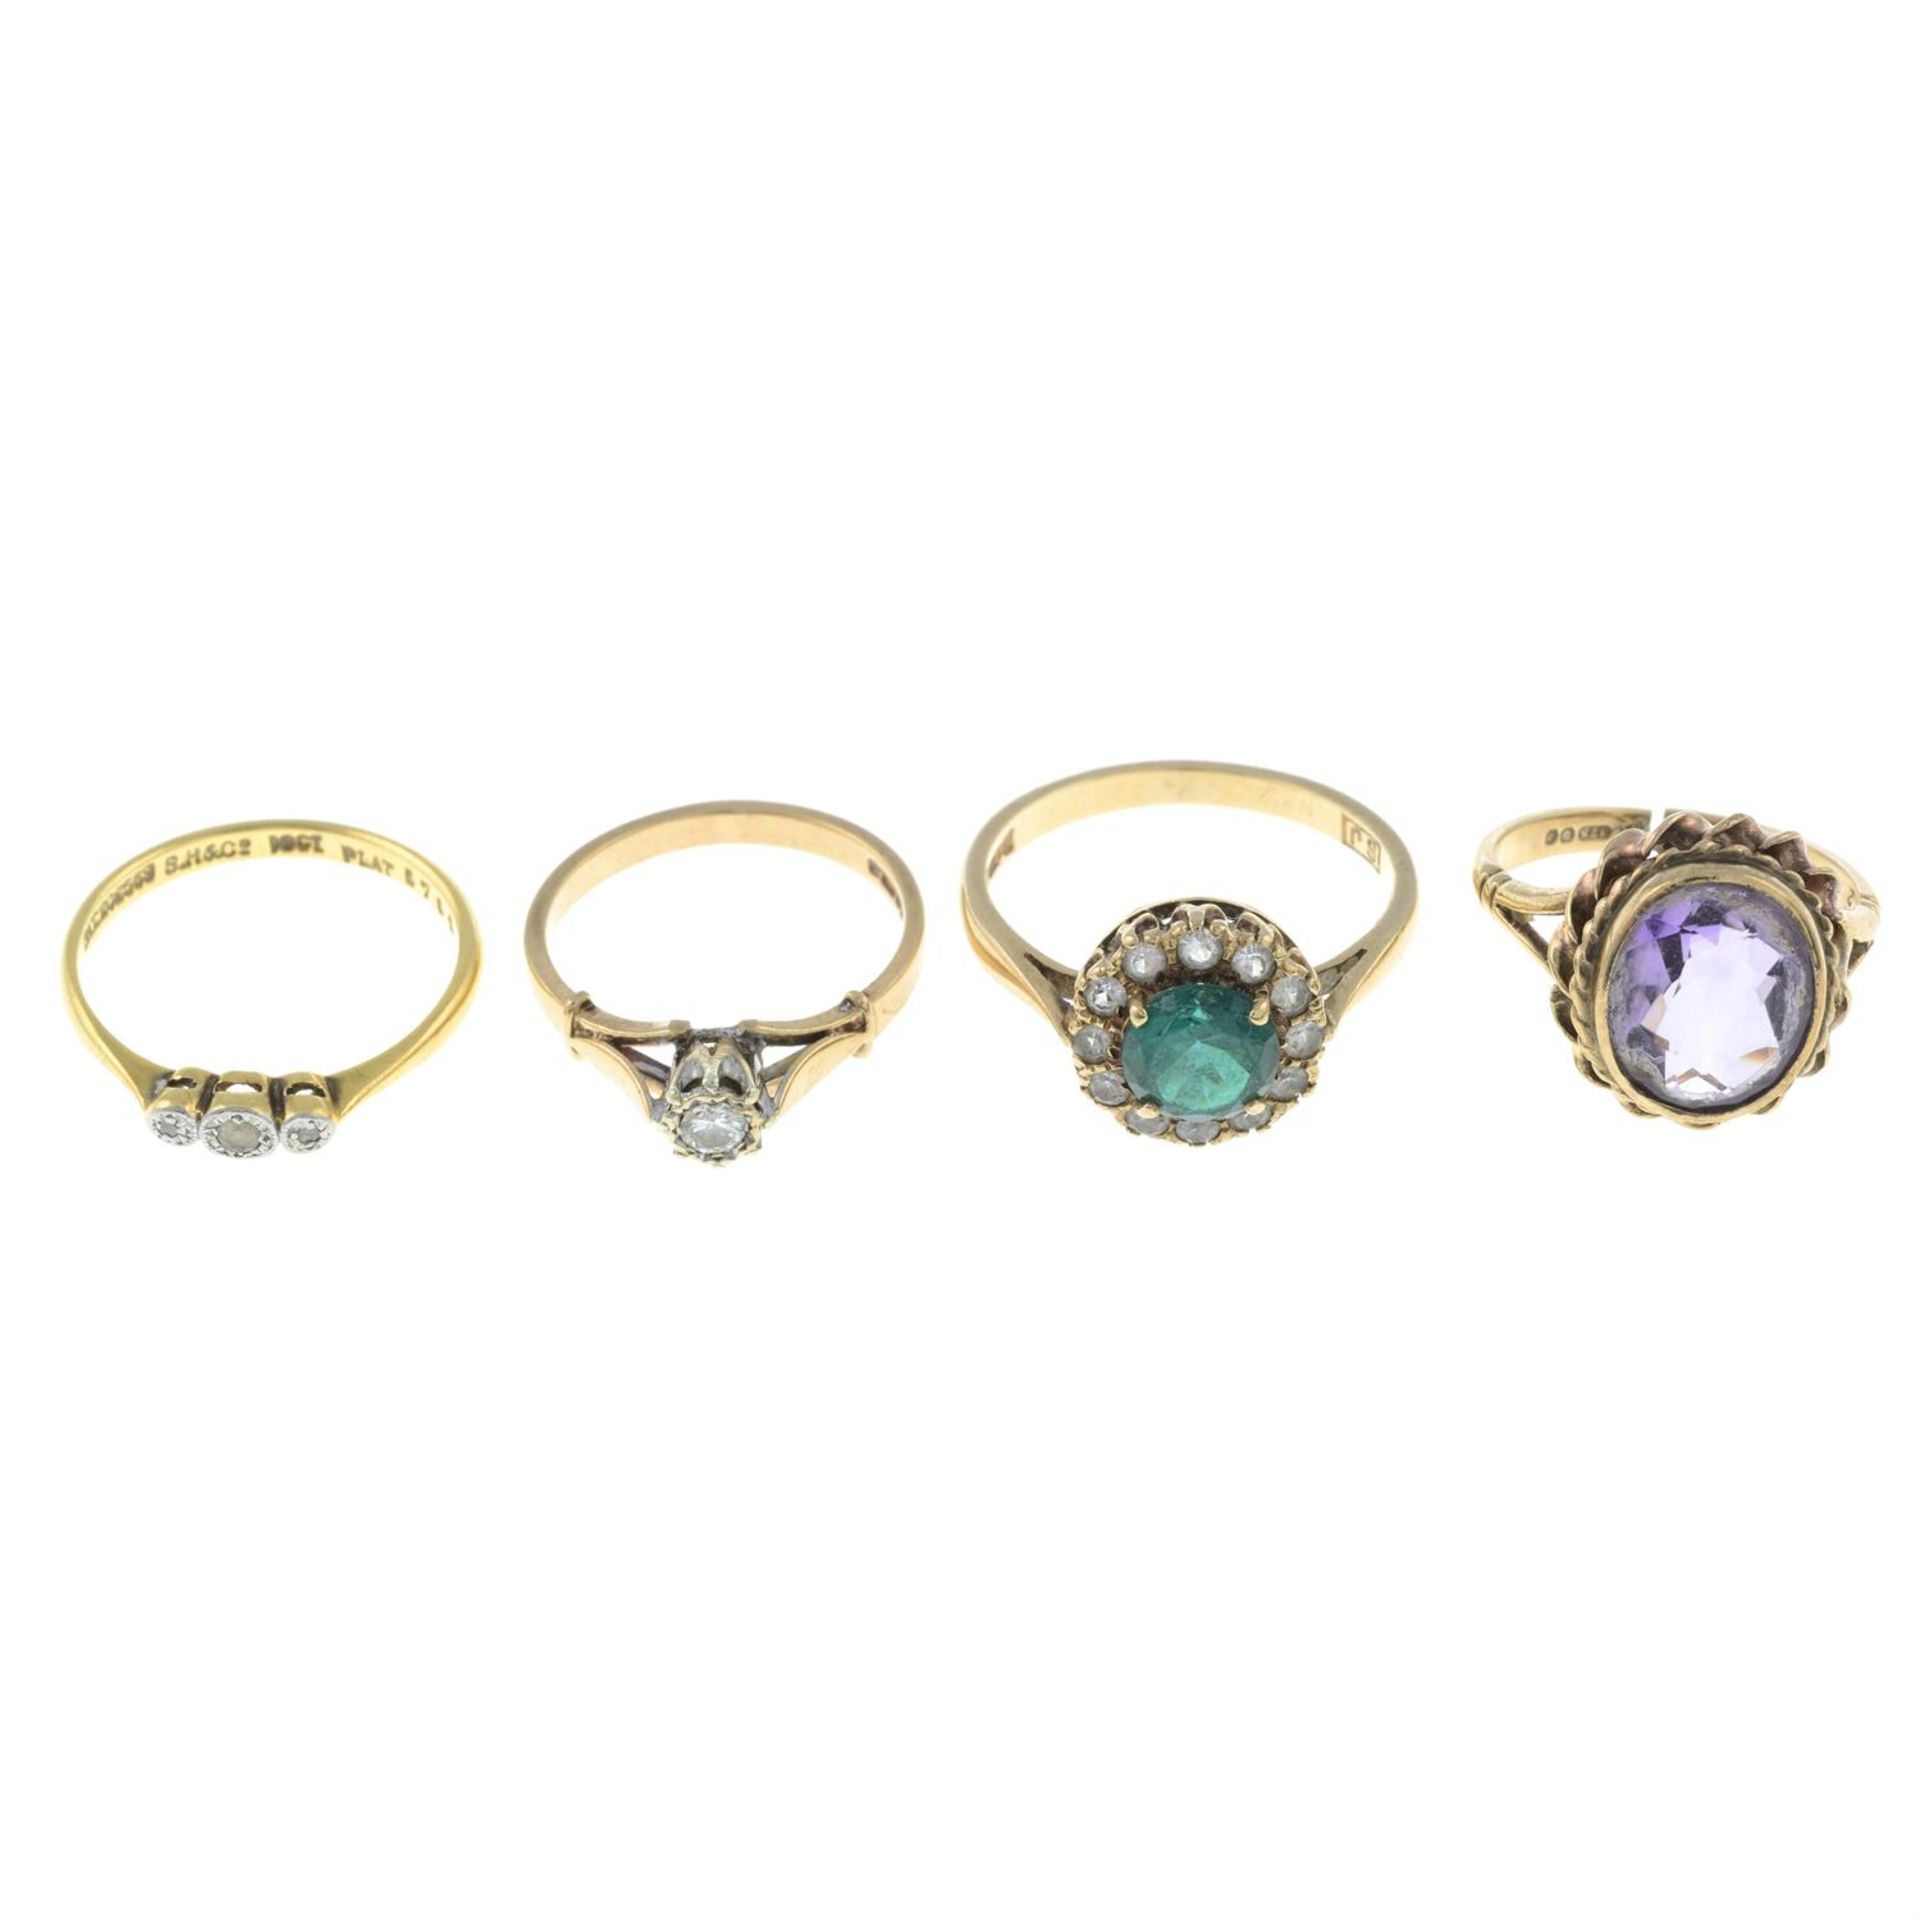 Four gem-set rings.